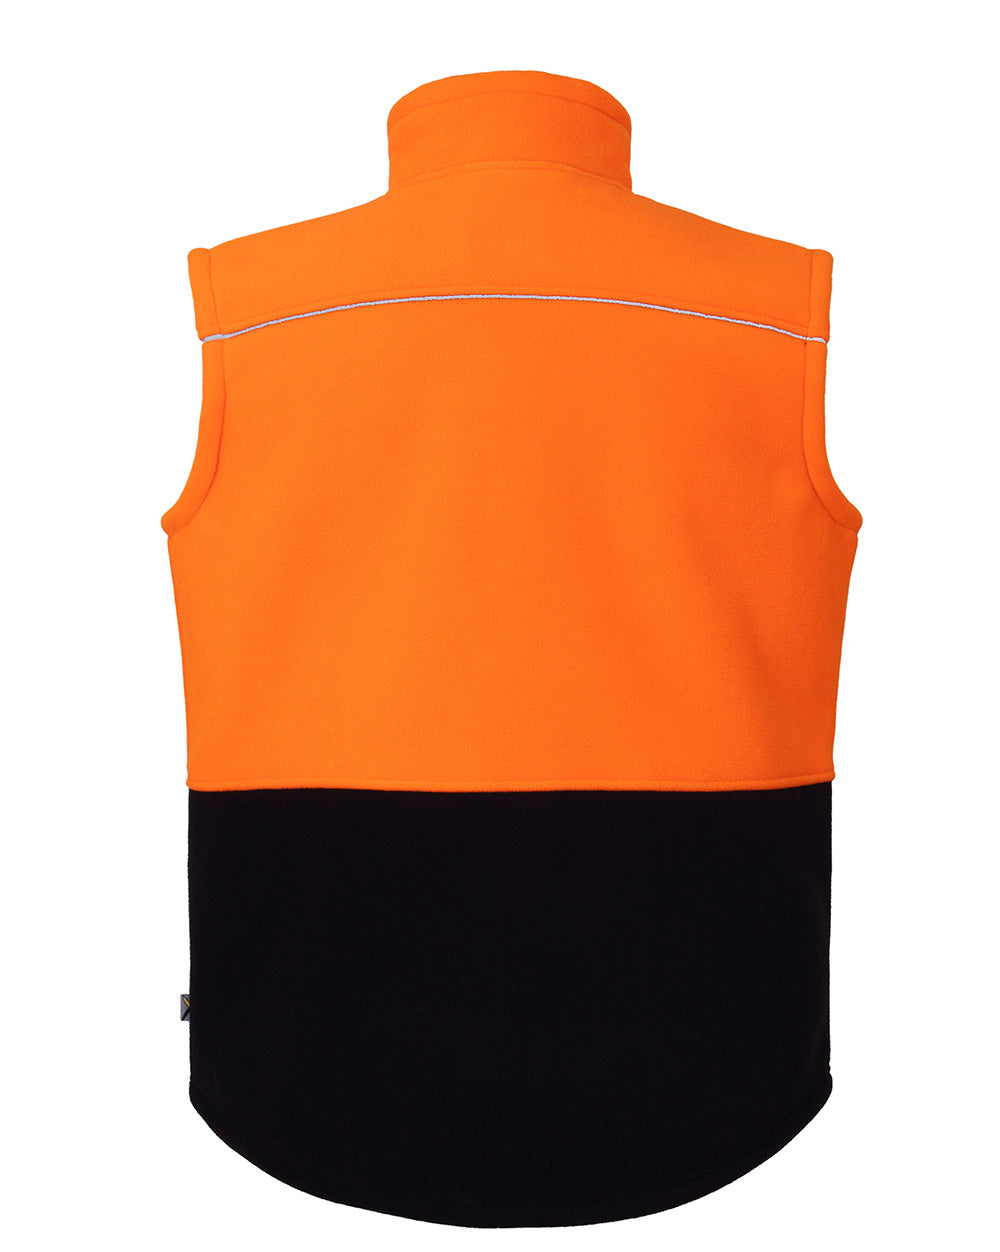 Maguire Vest in Fluoro Orange & Navy